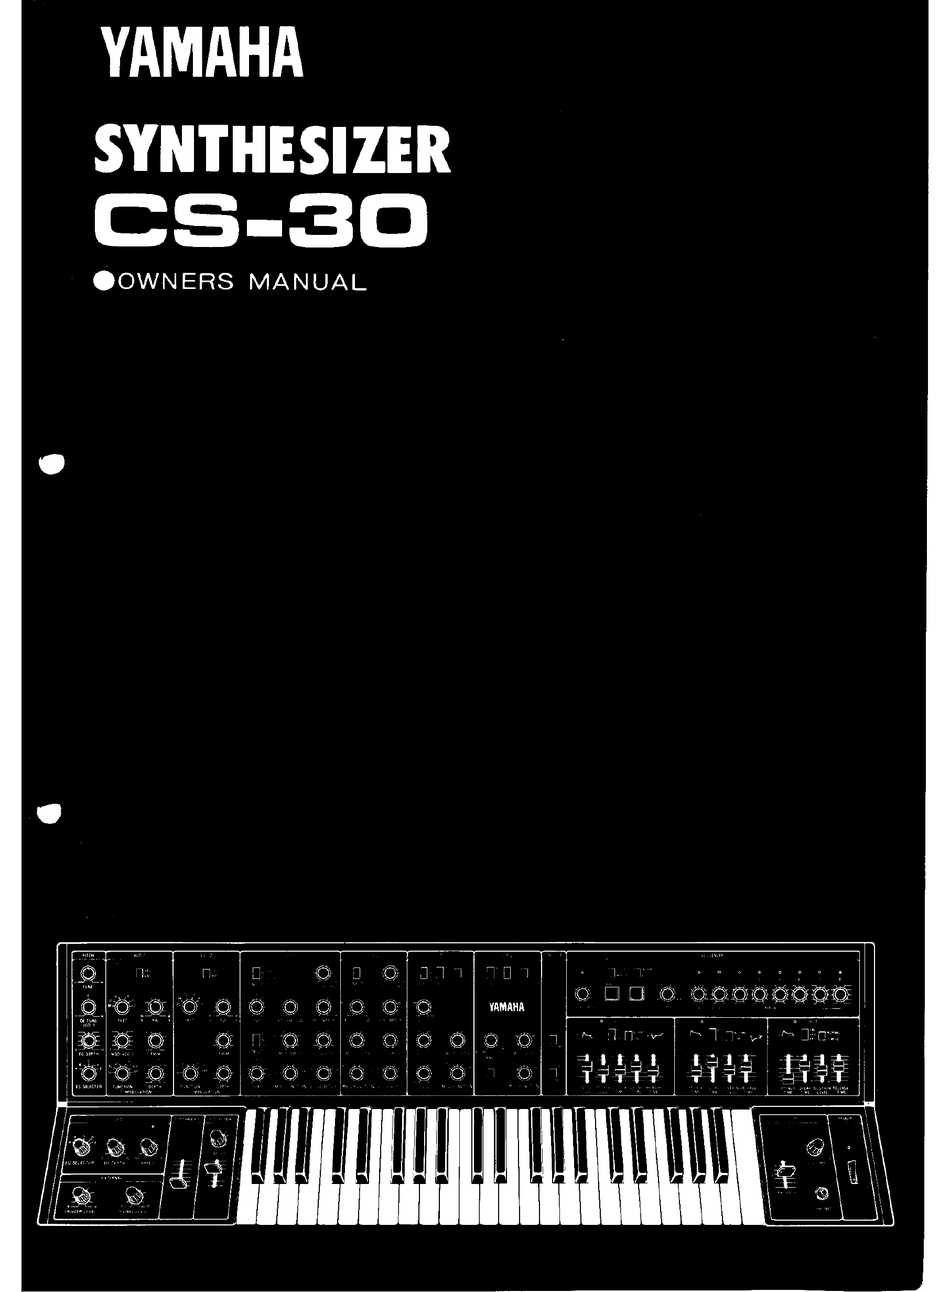 YAMAHA CS-30 OWNER'S MANUAL Pdf Download | ManualsLib